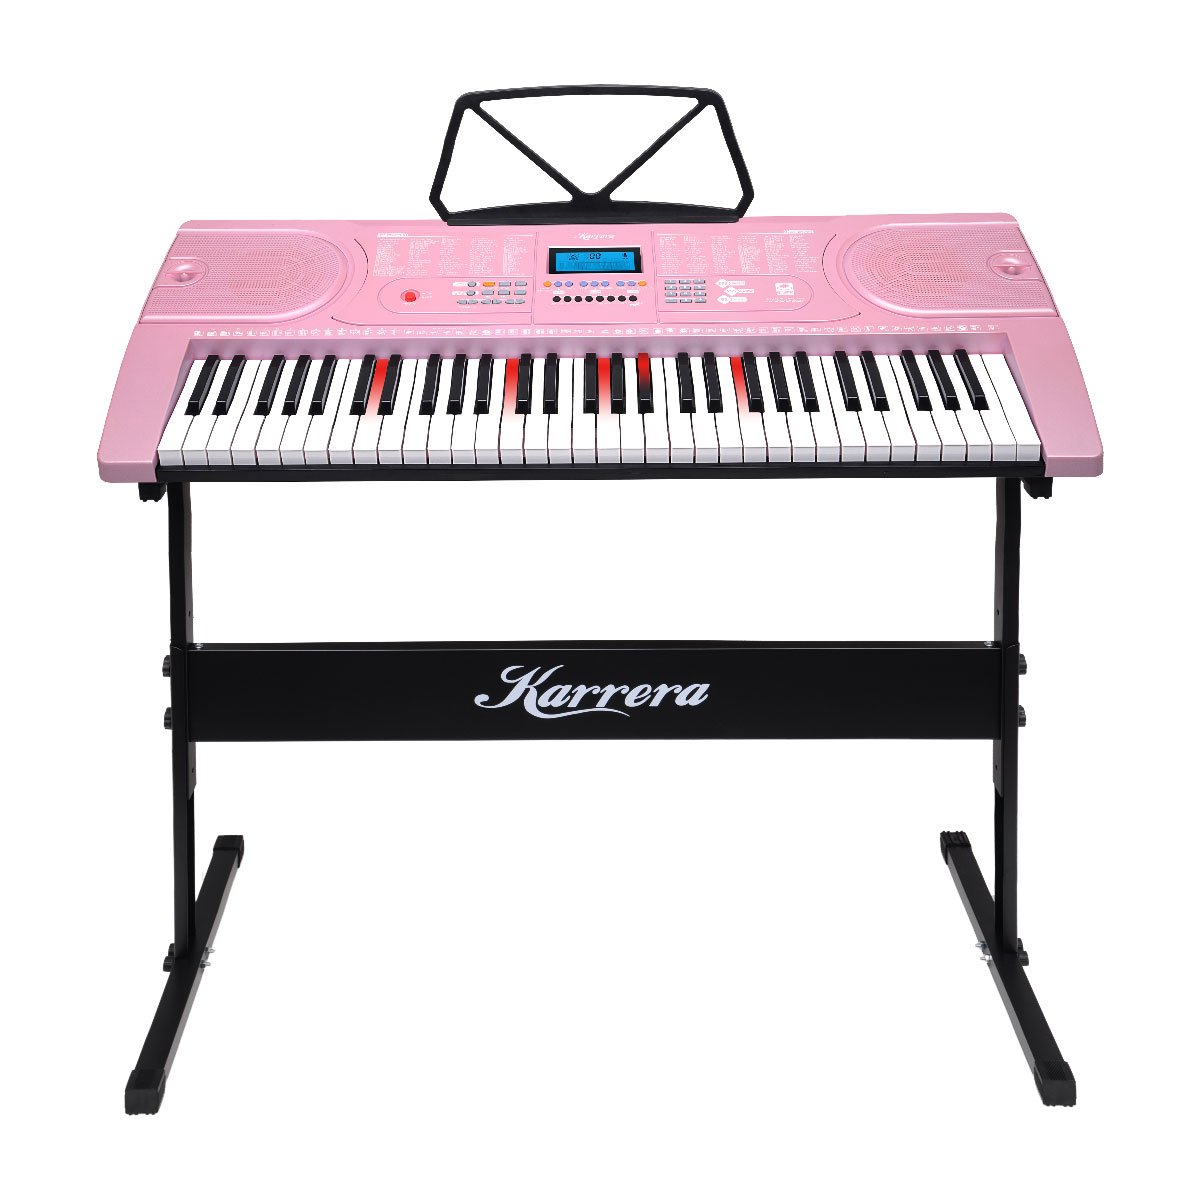 Karrera 61 Keys Electronic LED Piano Keyboard with Stand - Pink 1